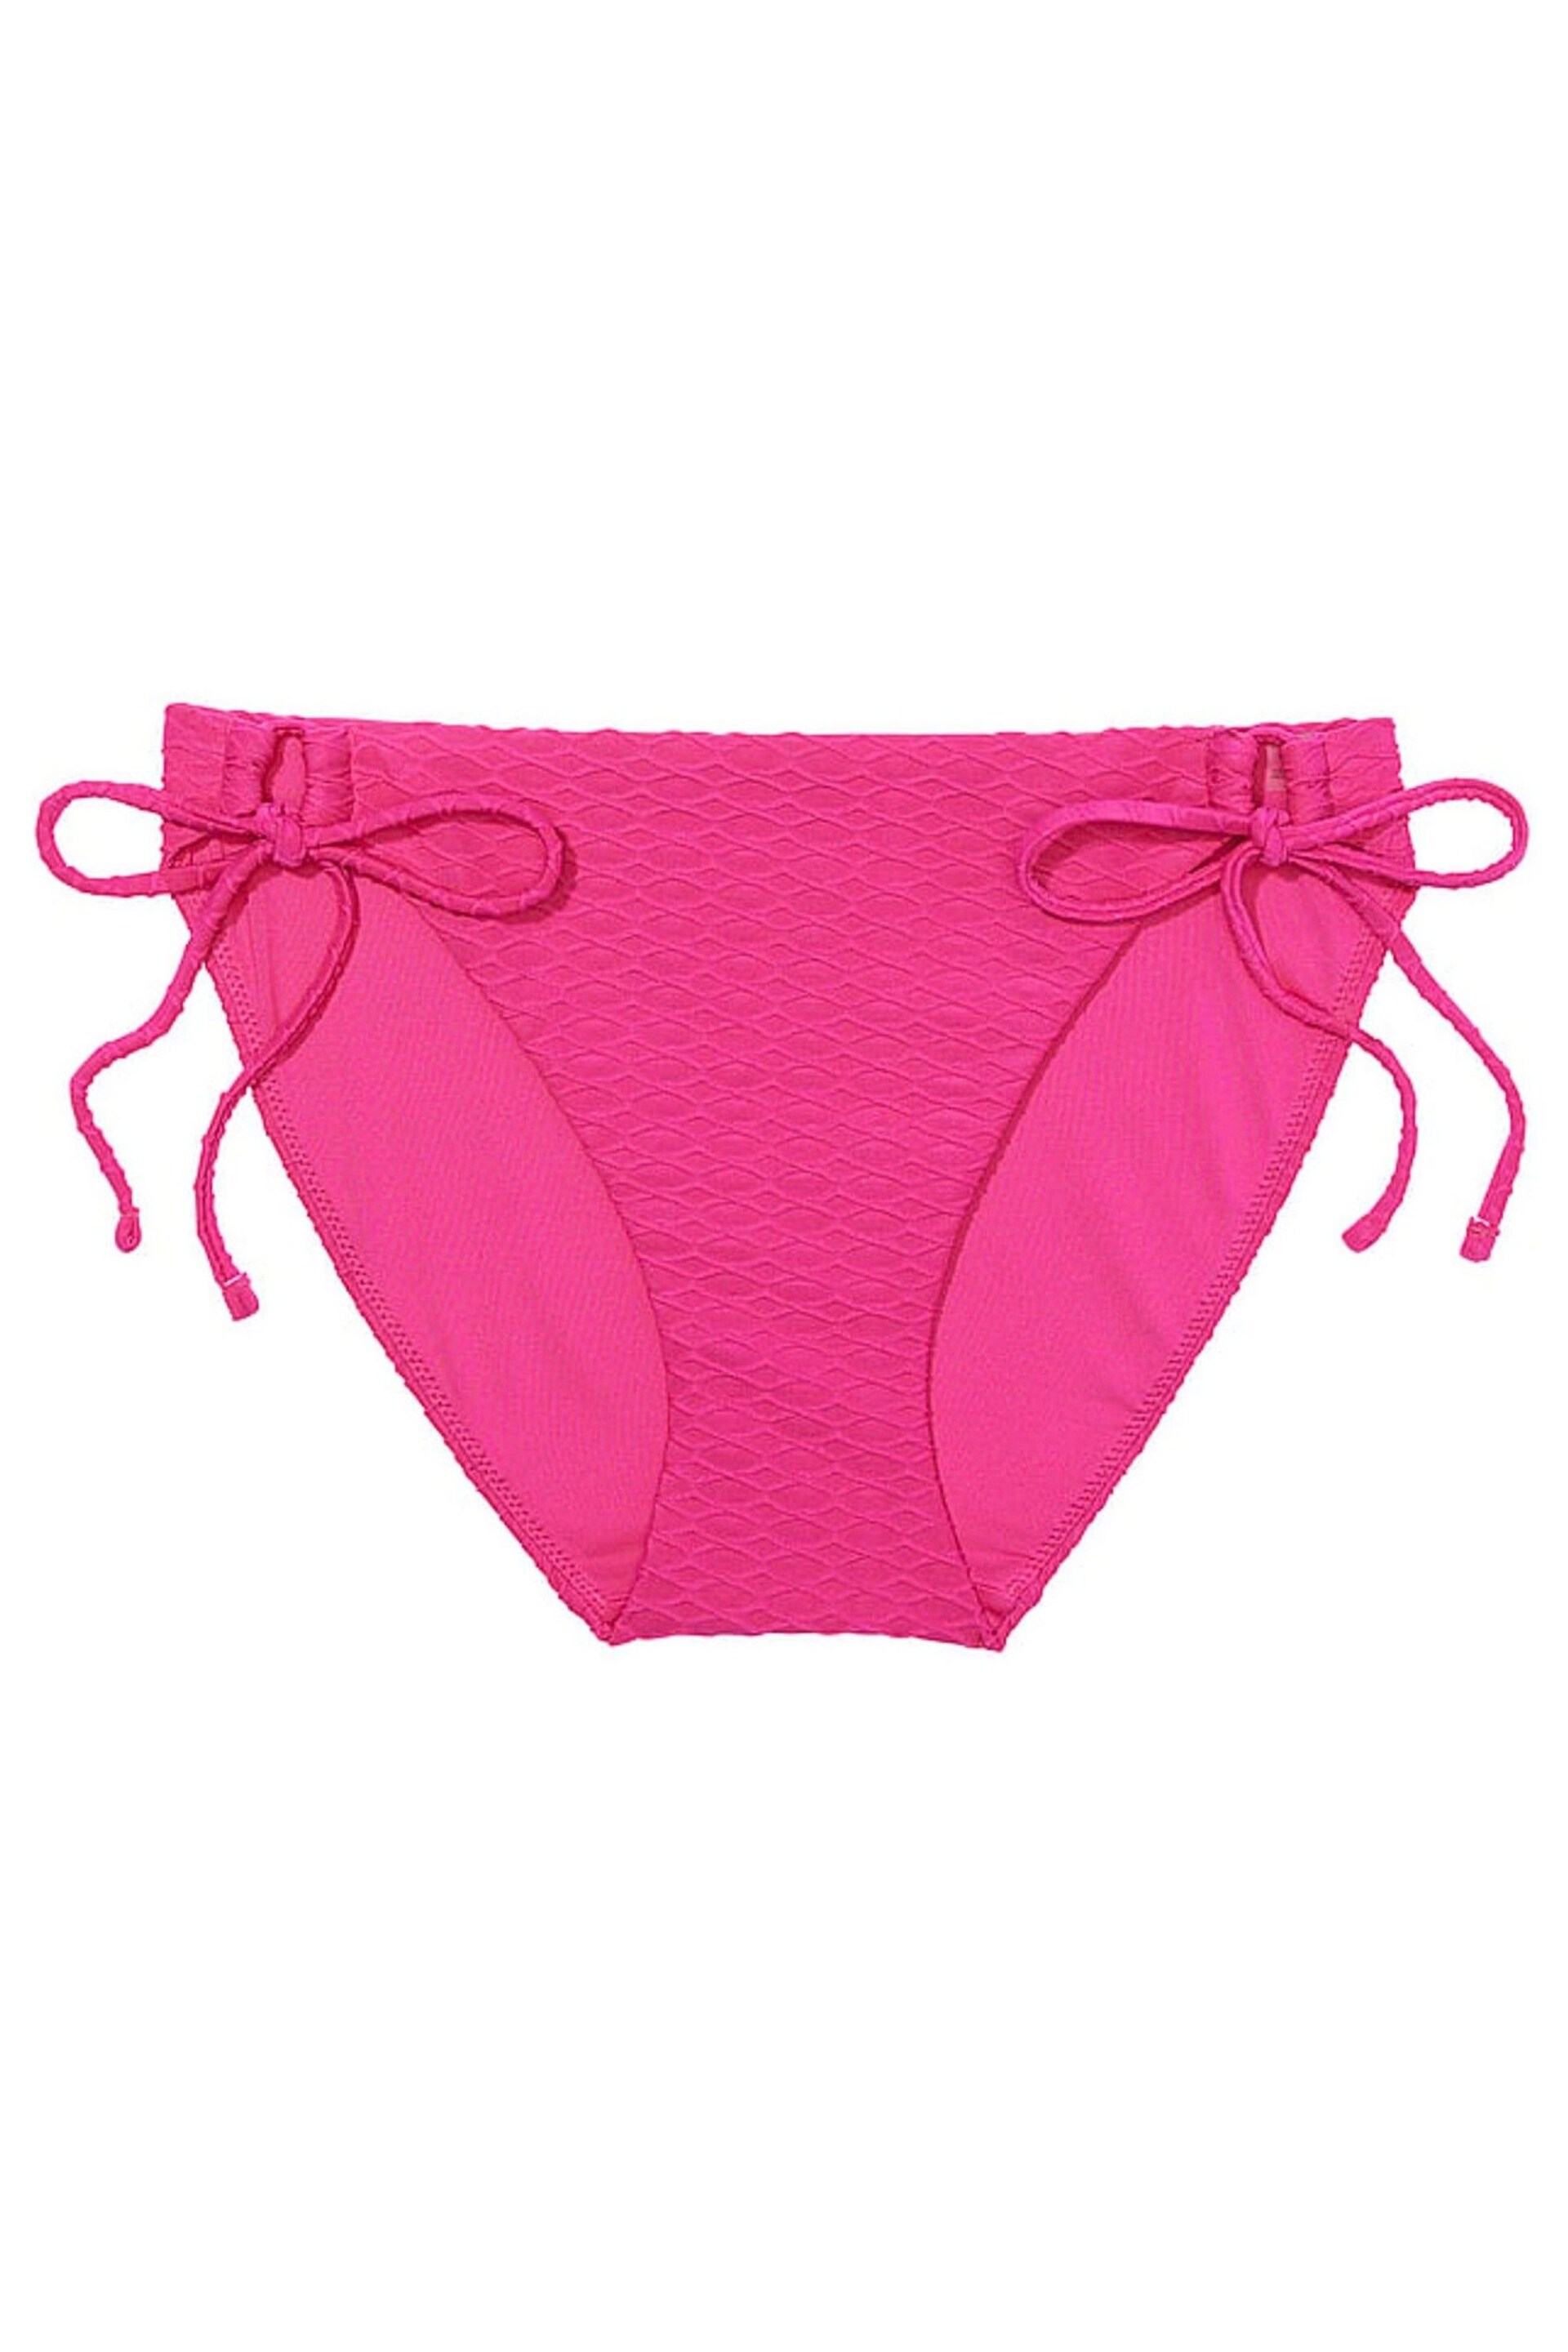 Victoria's Secret Forever Pink Fishnet Tie Side Swim Bikini Bottom - Image 3 of 3